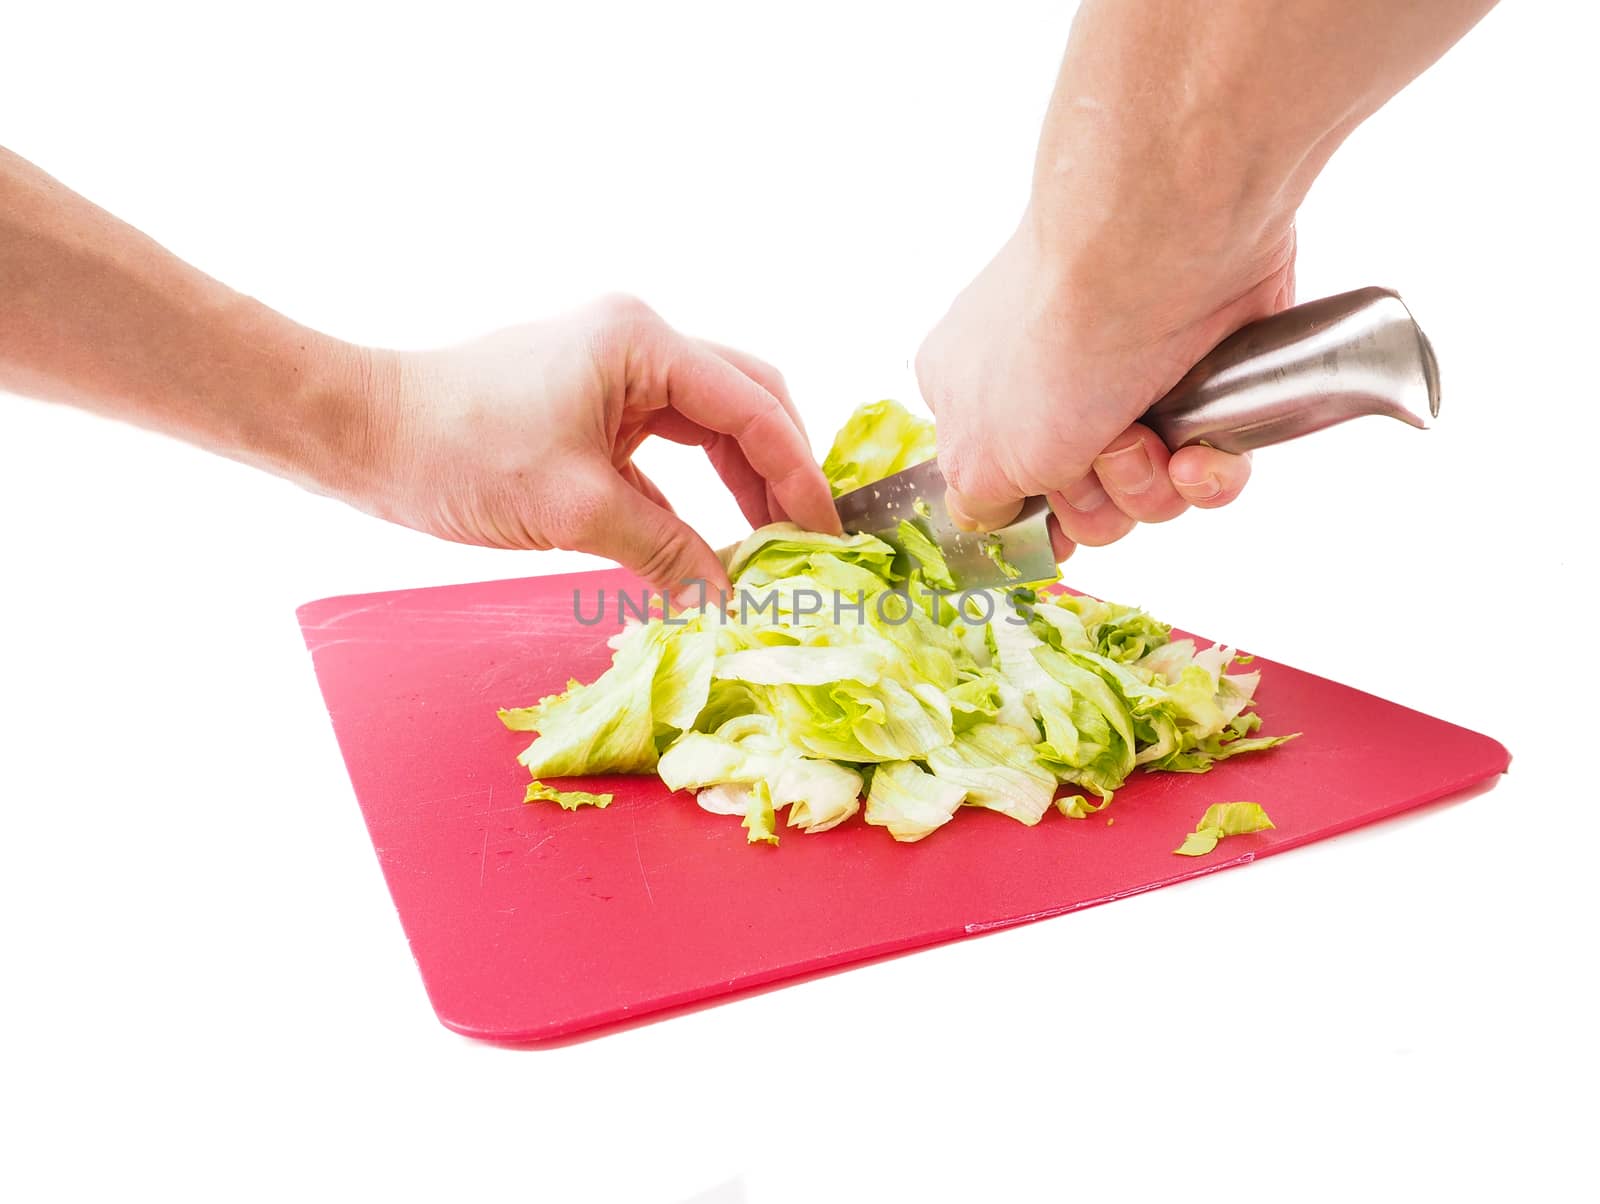 Hands cutting fresh green lettuce by Arvebettum